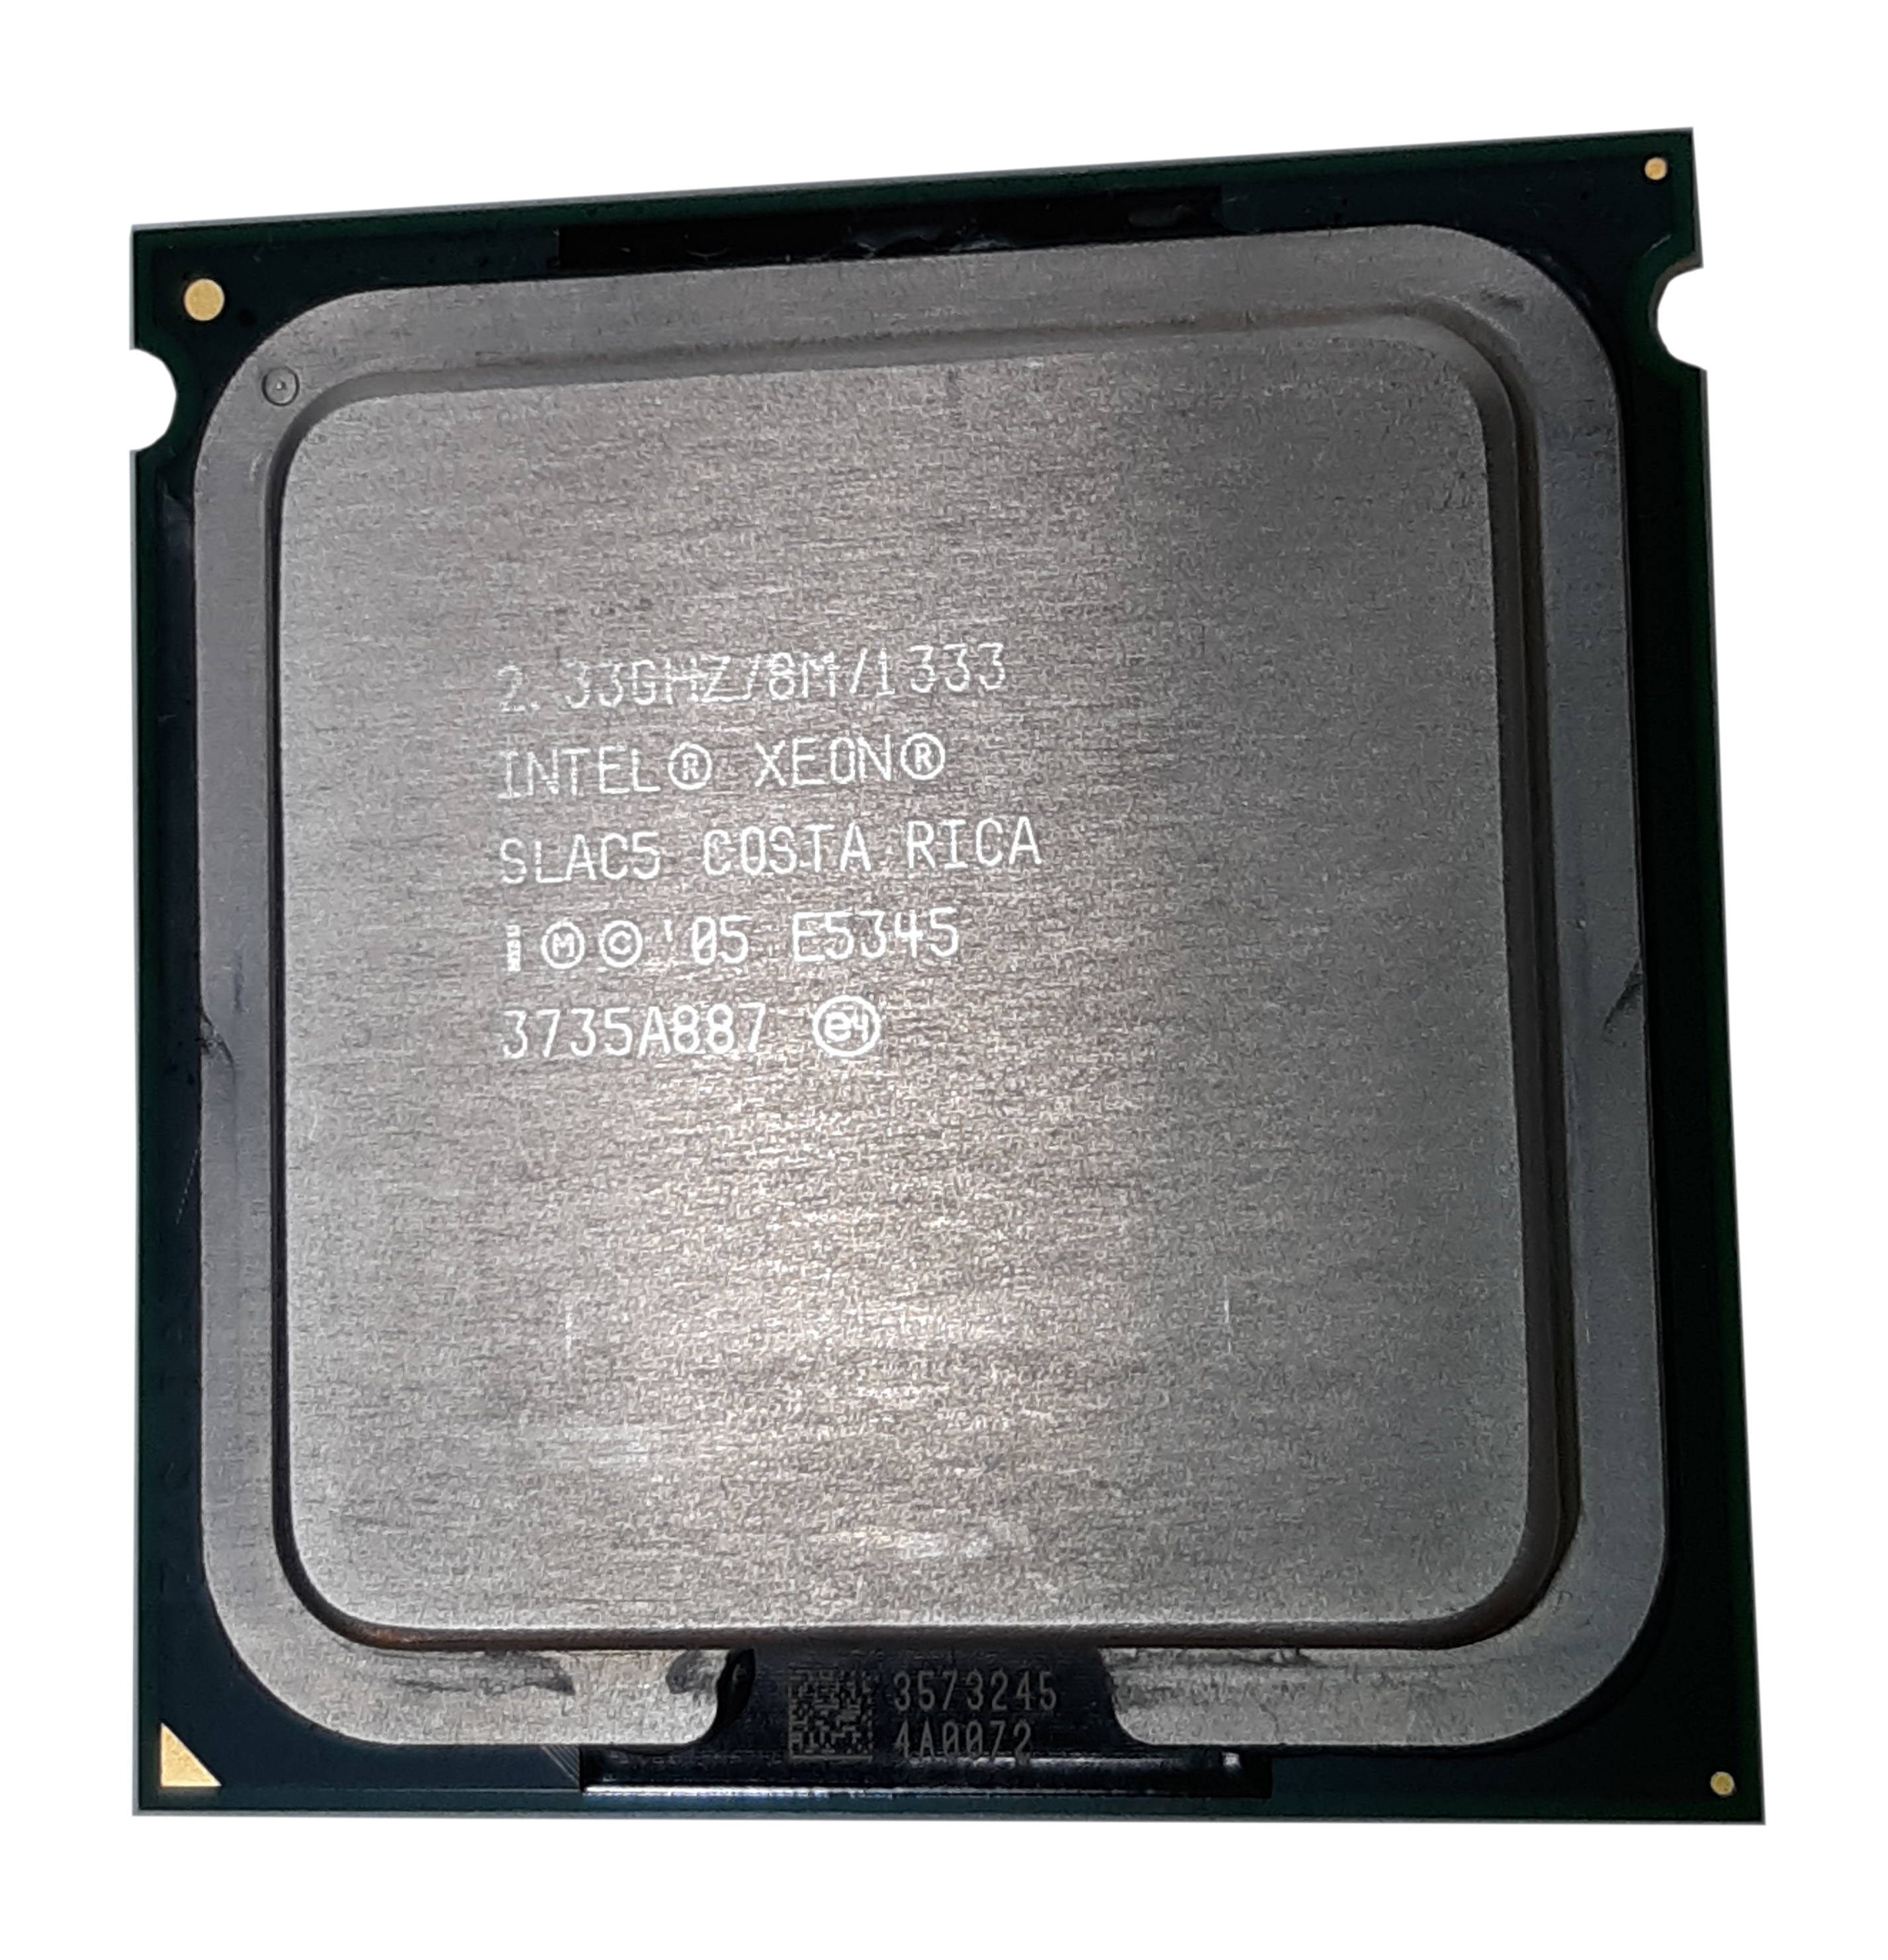 Intel Xeon Processor CPU E5345 2.33GHz Quad Core 8MB 1333 LGA771 SLAC5 - Click Image to Close